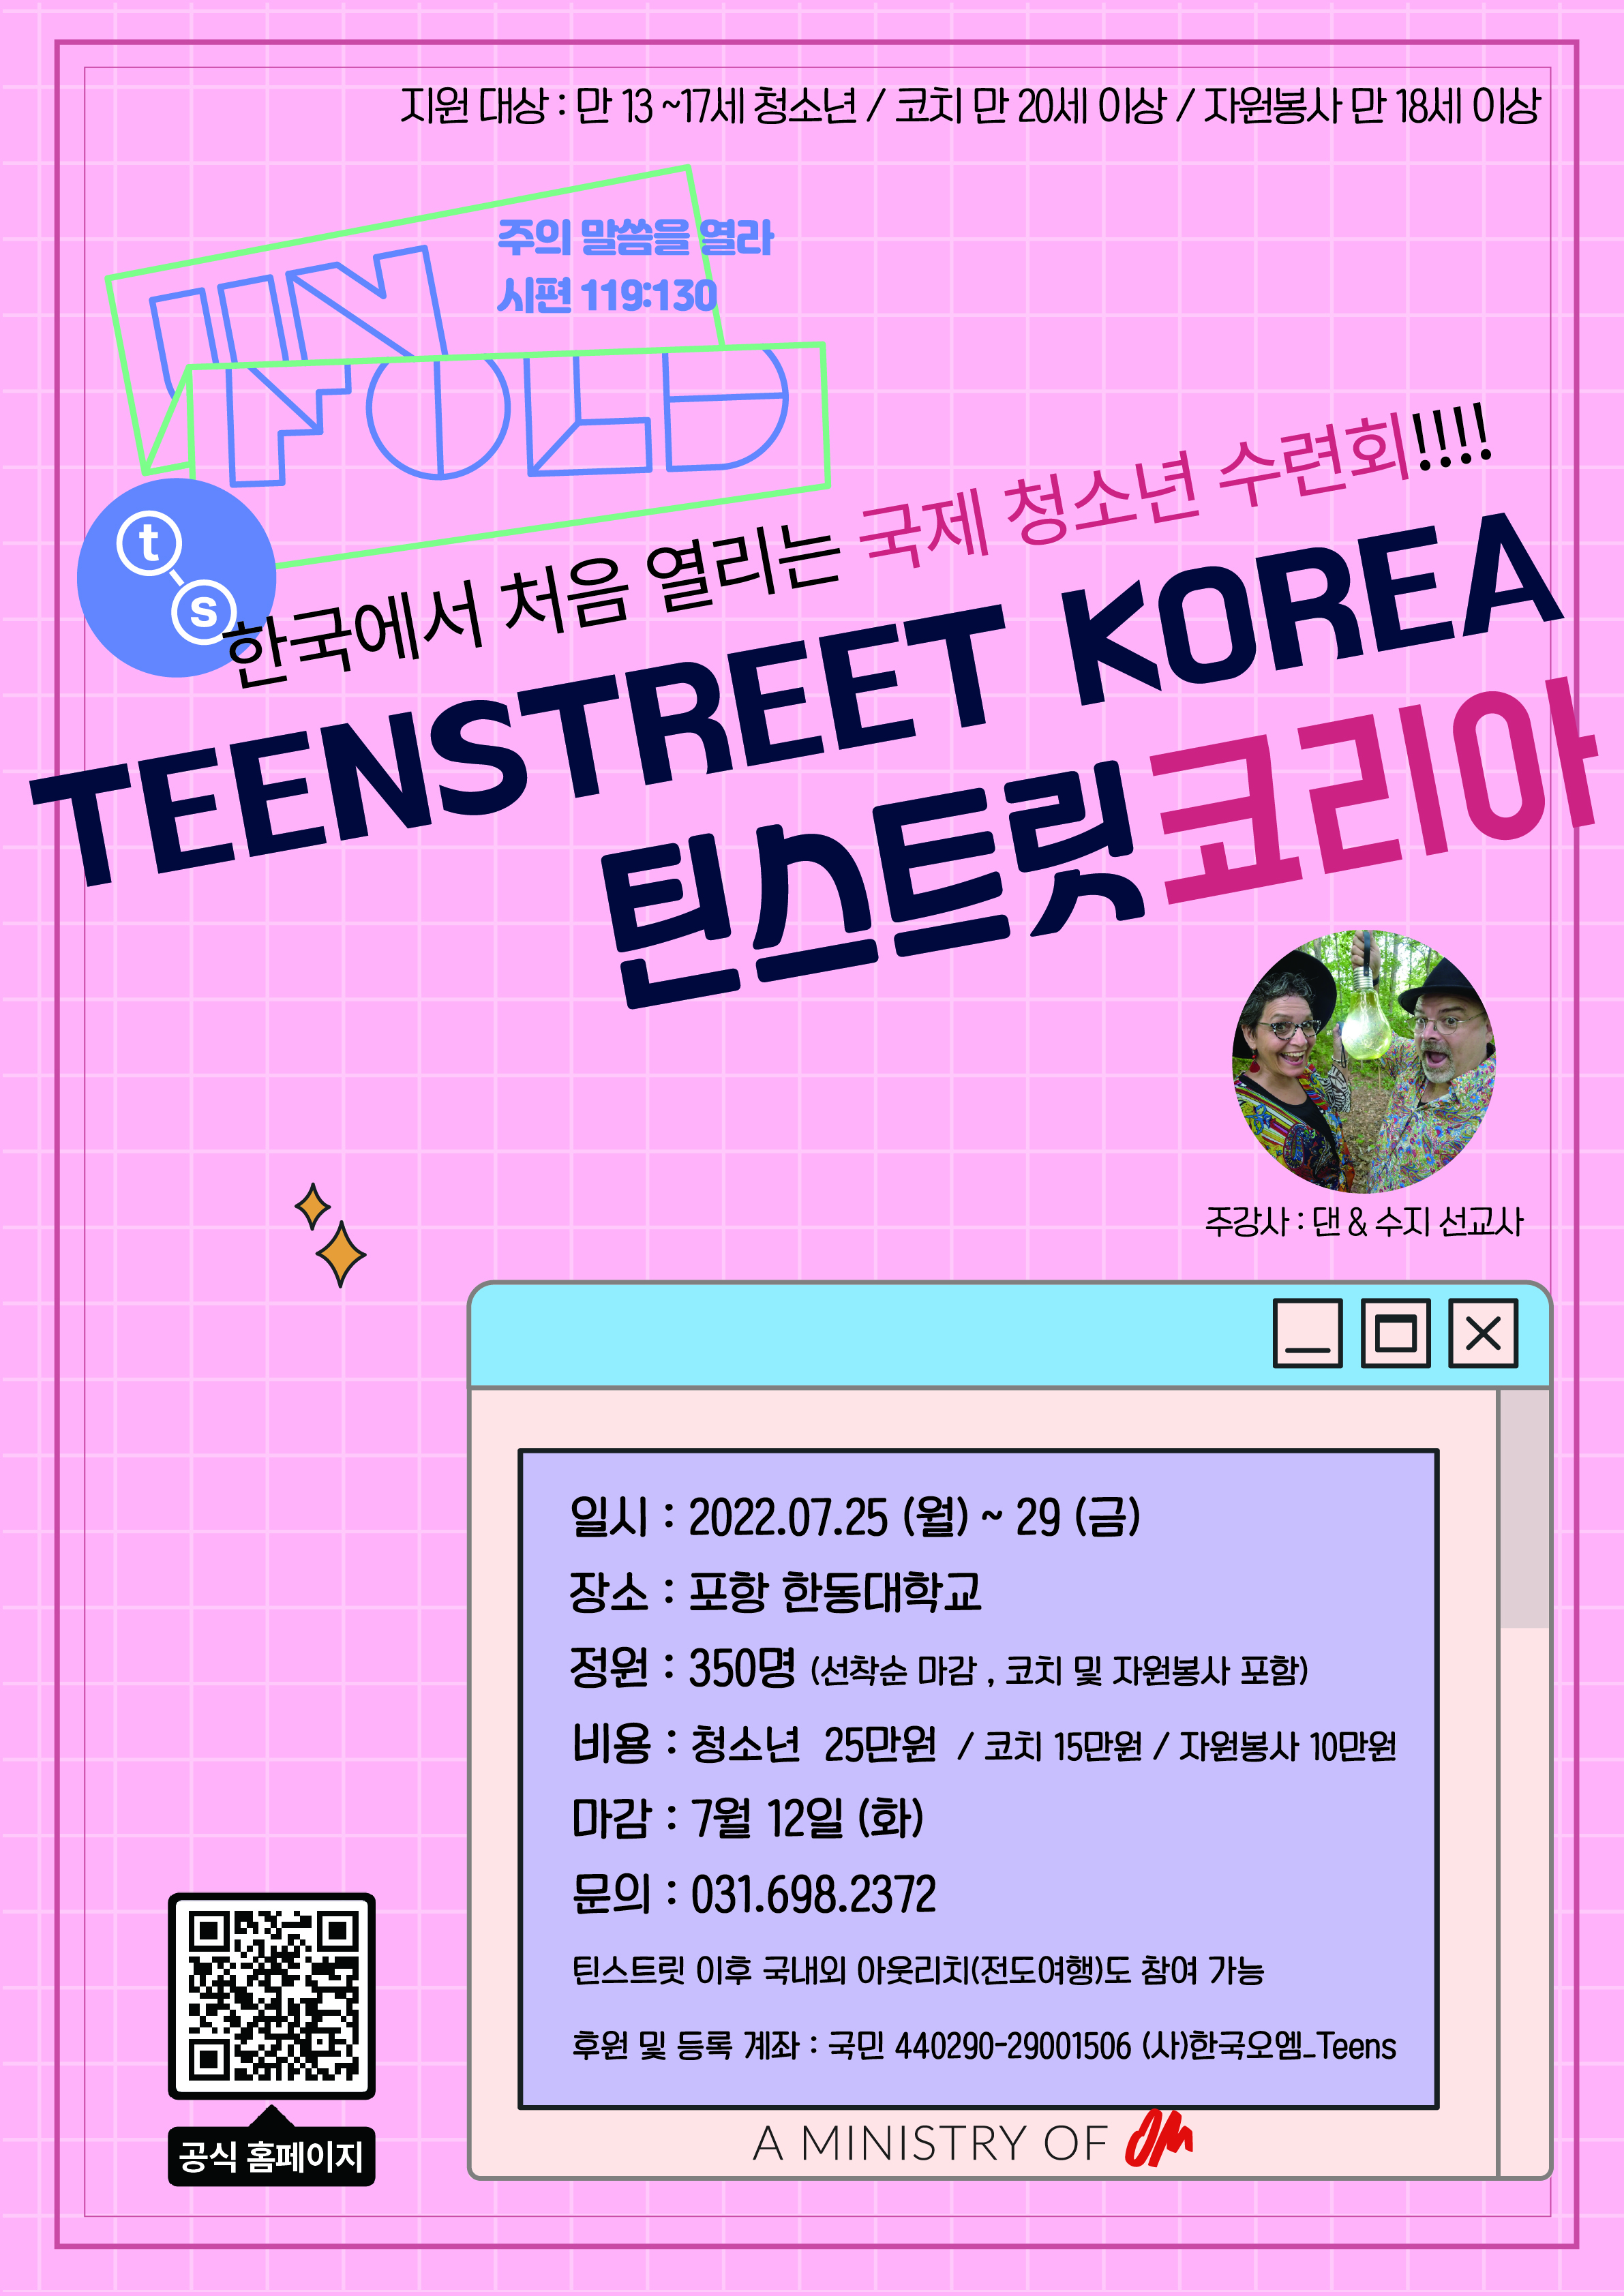 TeenStreetKorea.jpg